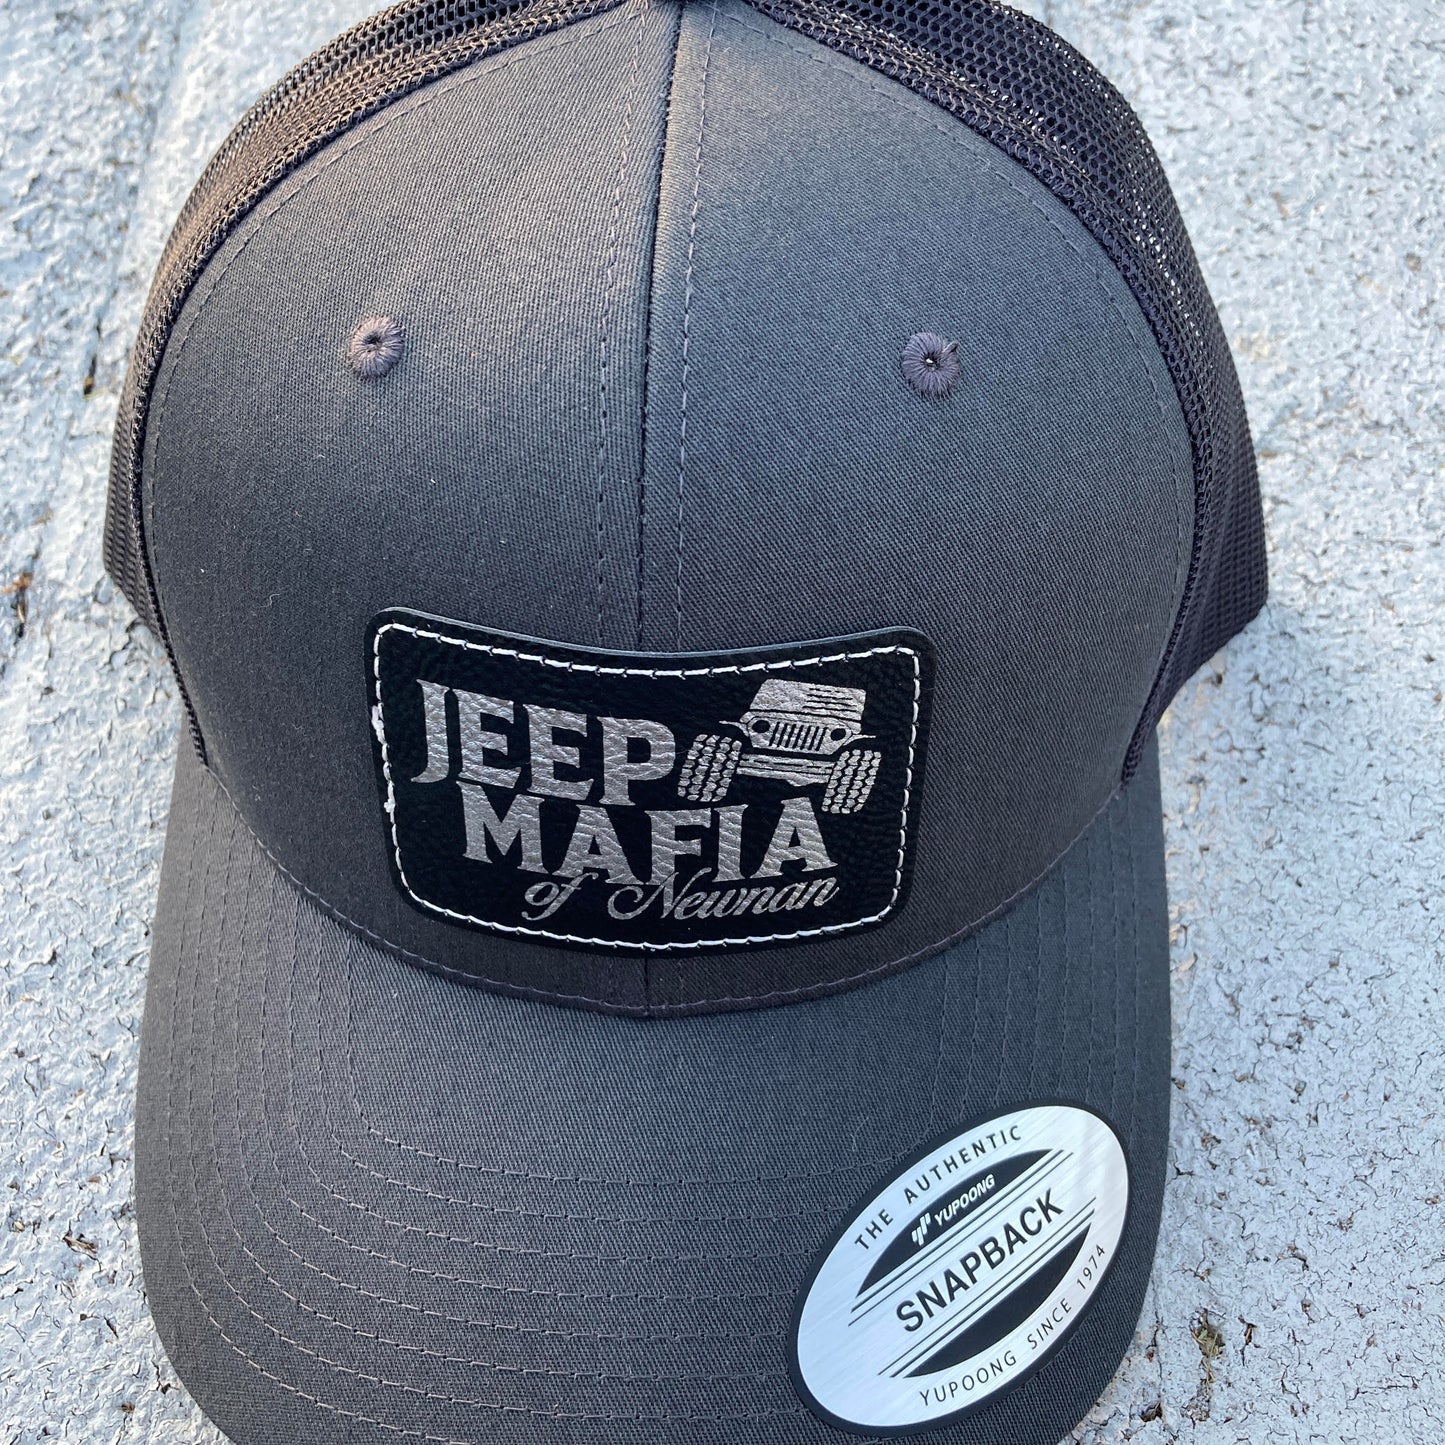 Charcoal Gray and Black Mesh Snapback Jeep Mafia of Newnan Hat